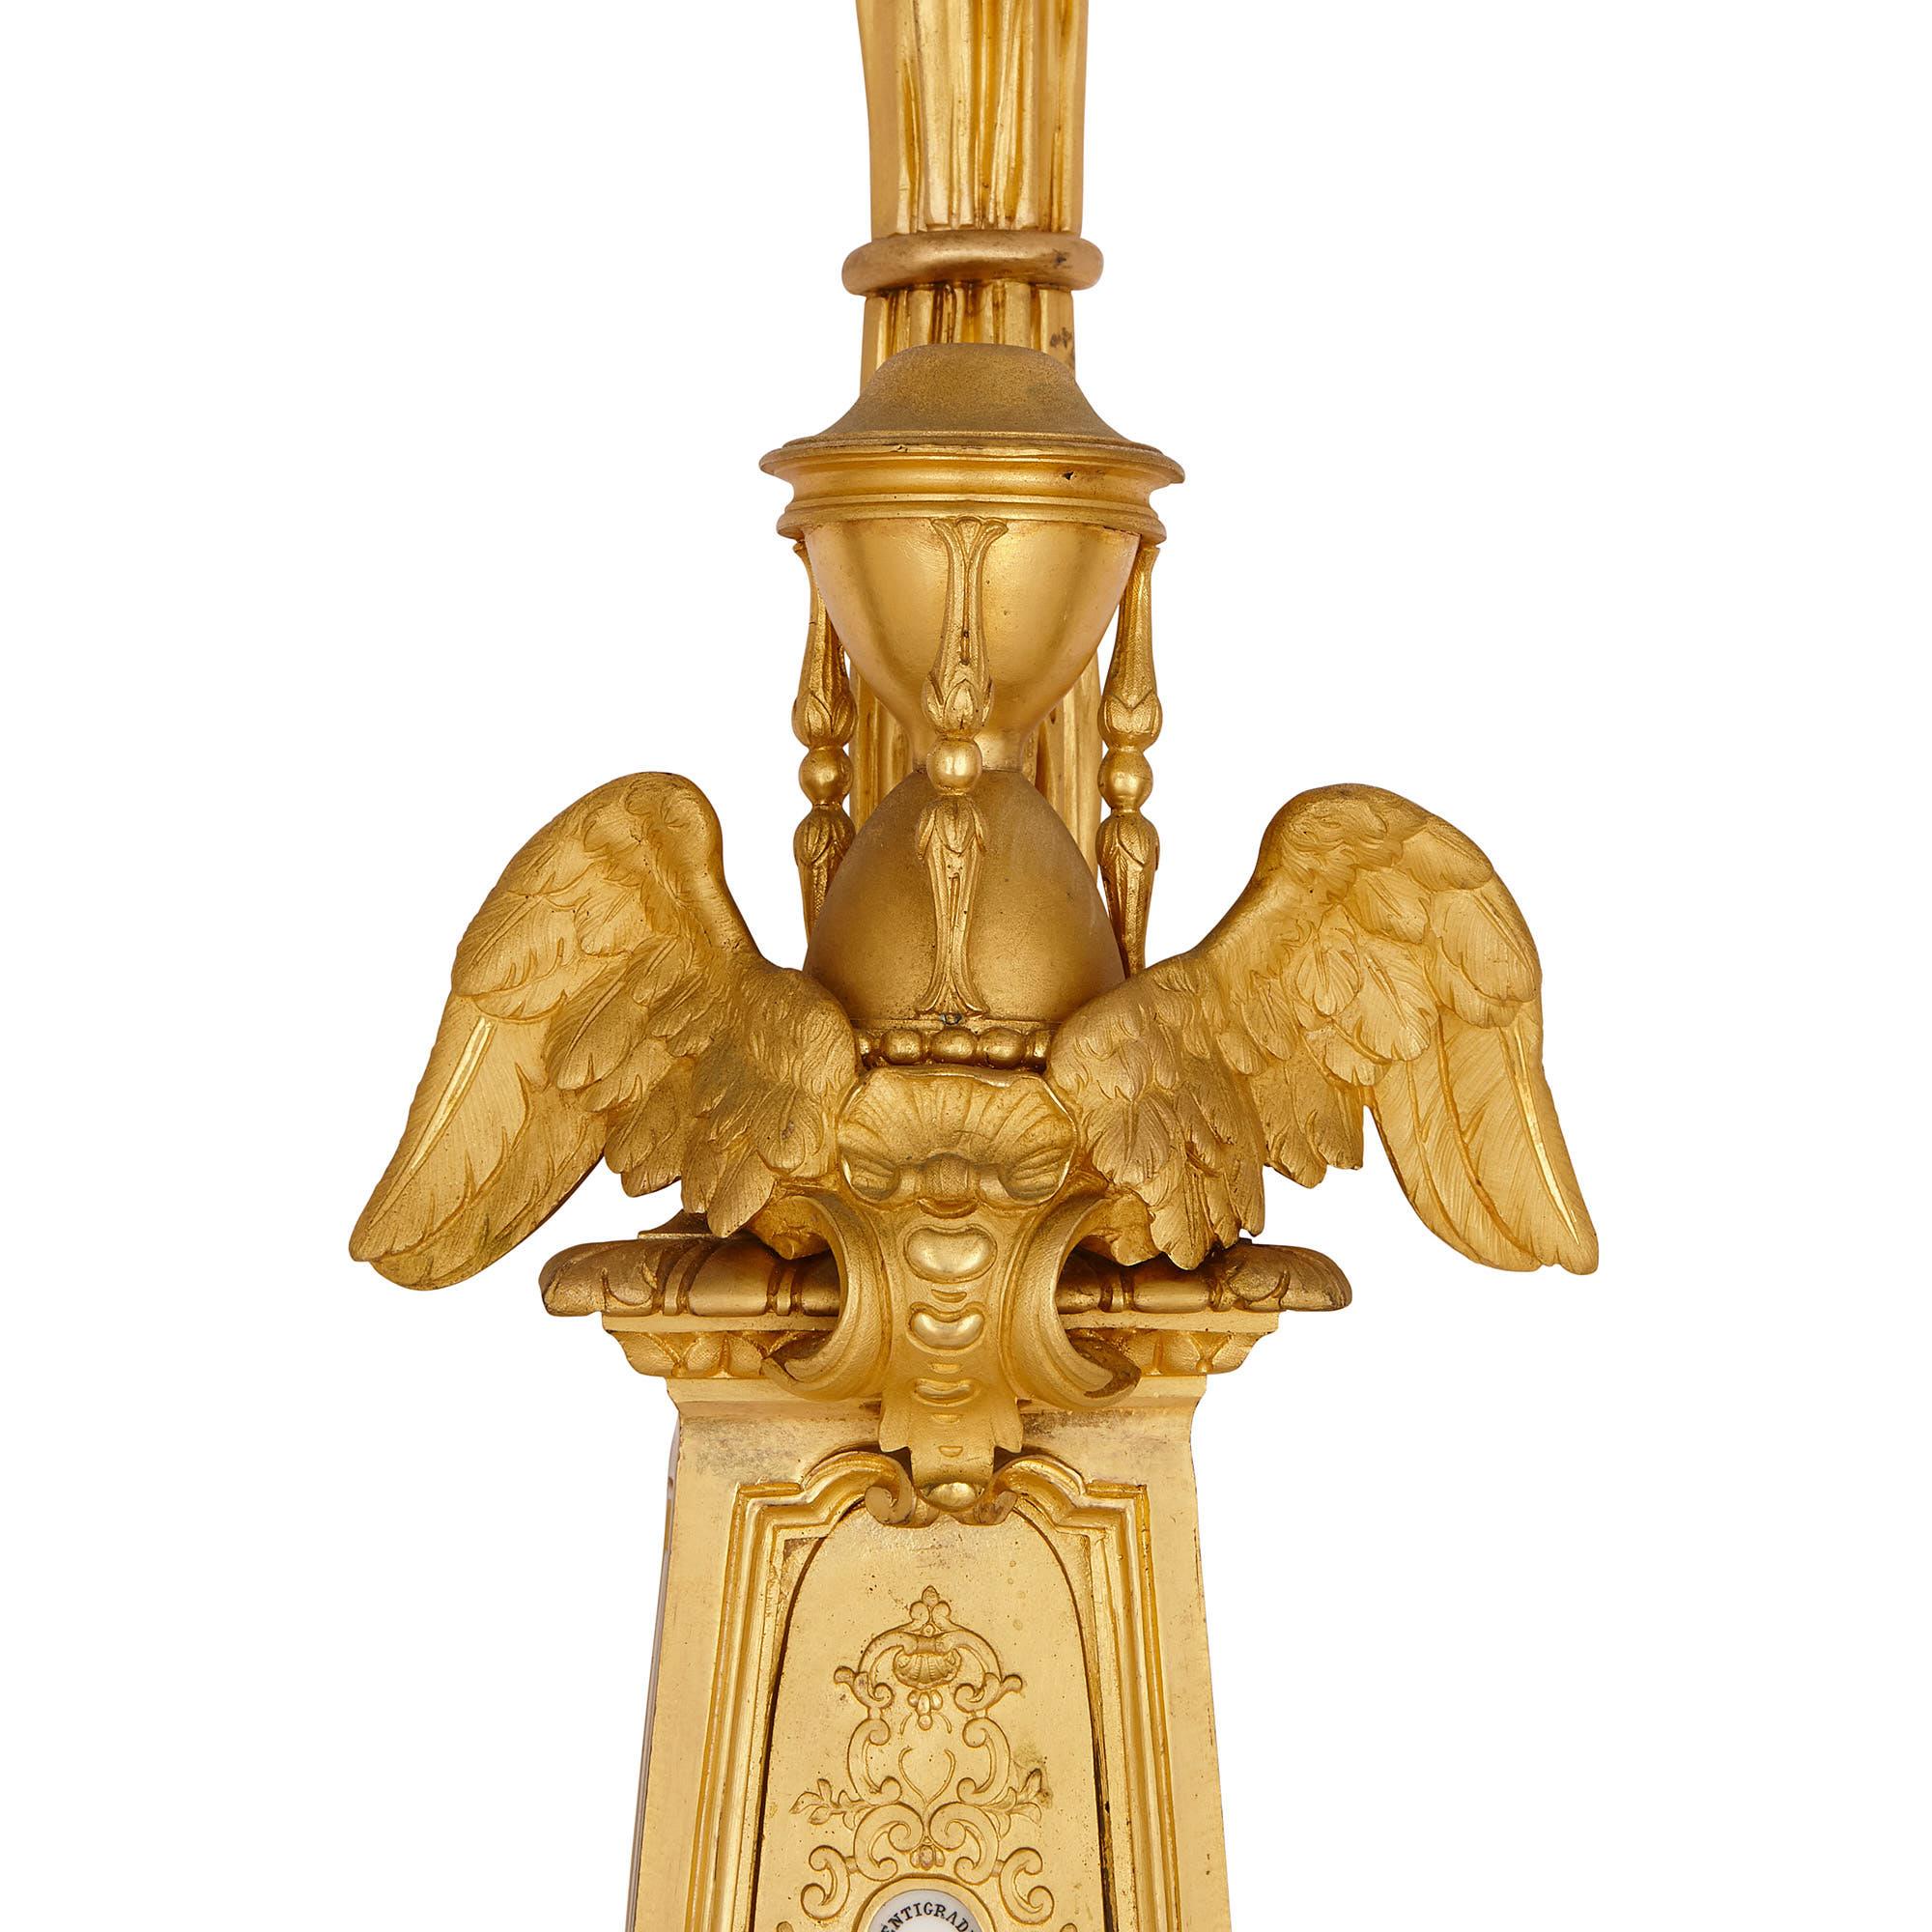 Napoleon III Period Gilt Bronze Clock and Barometer, Attributed to Raingo Frères For Sale 2